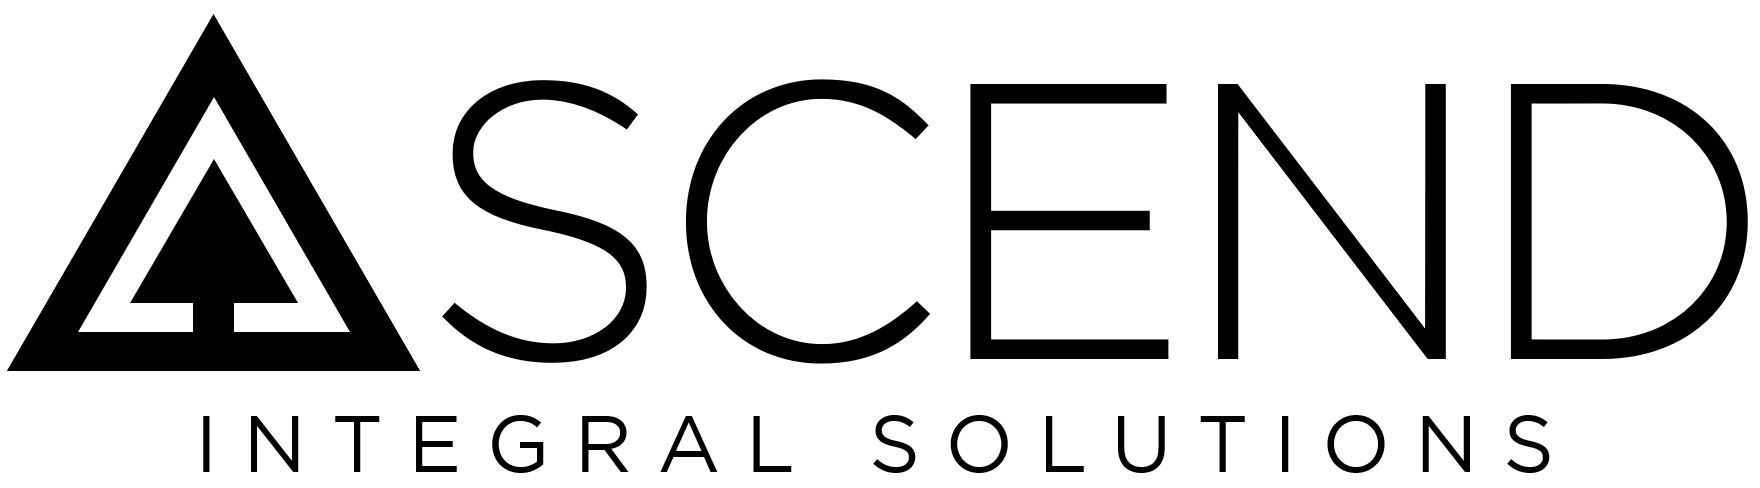 Ascend Integral Solutions